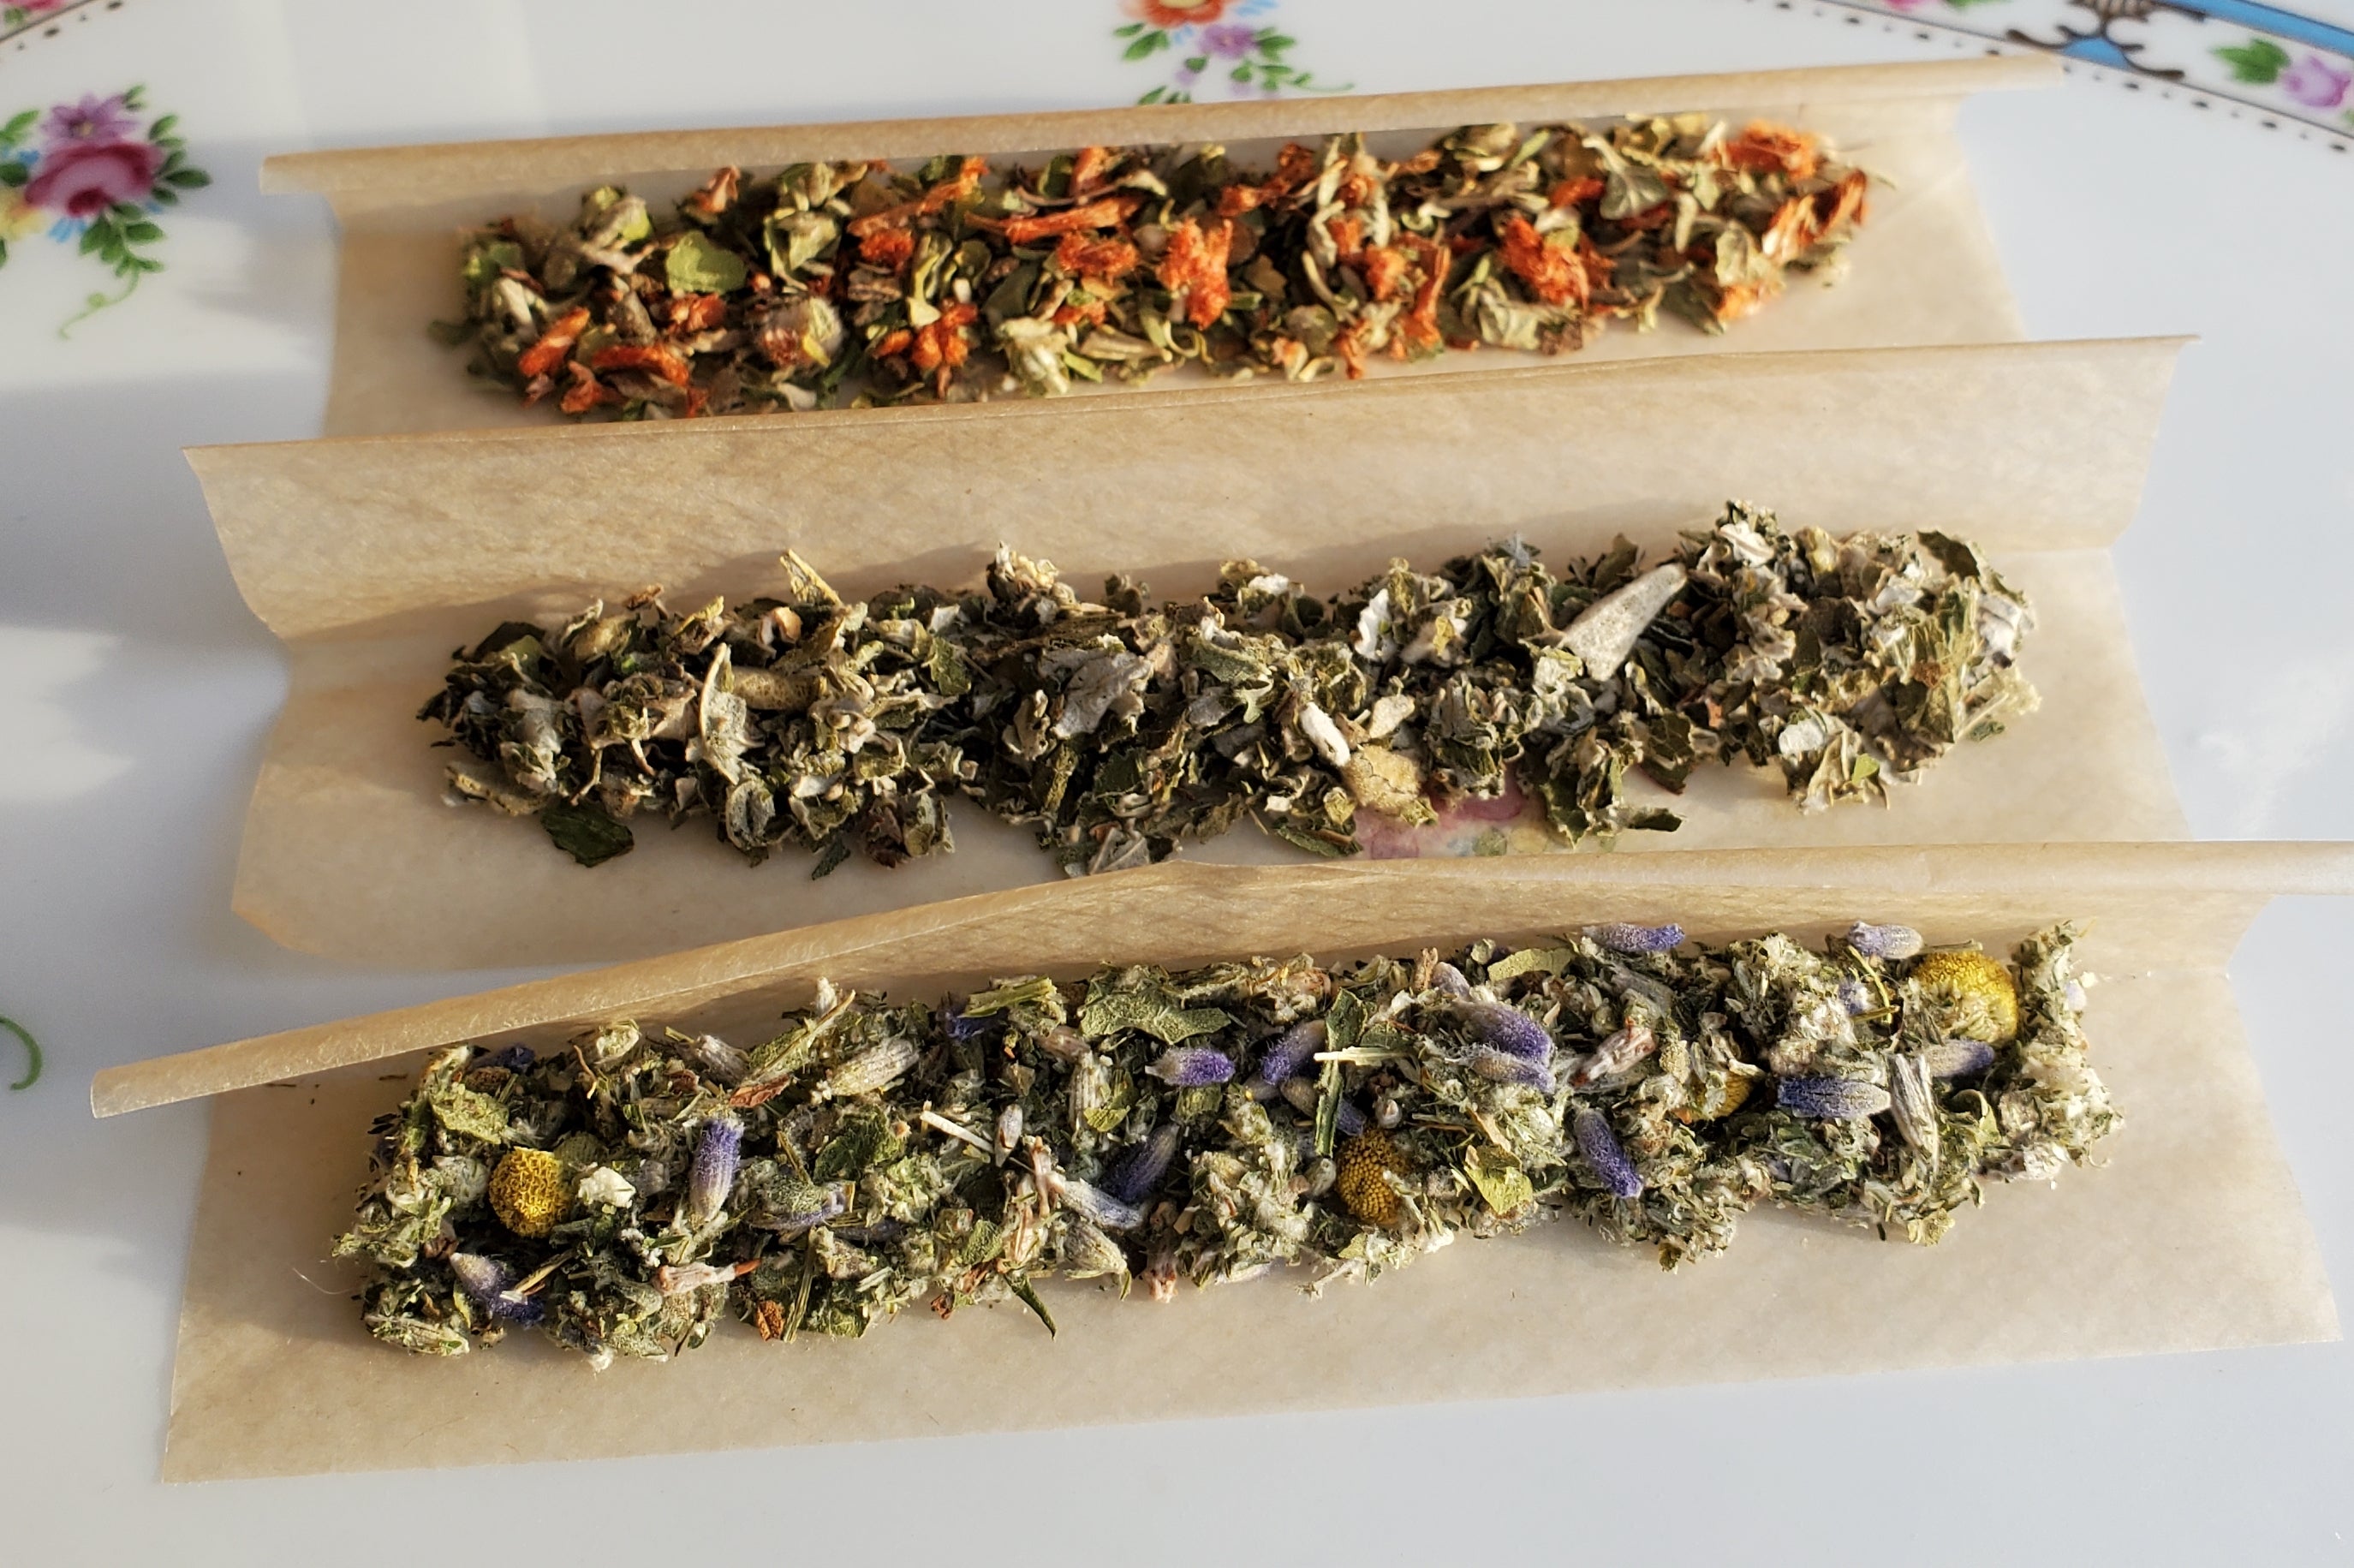 Smokable Herbs - Best Legal Alternatives